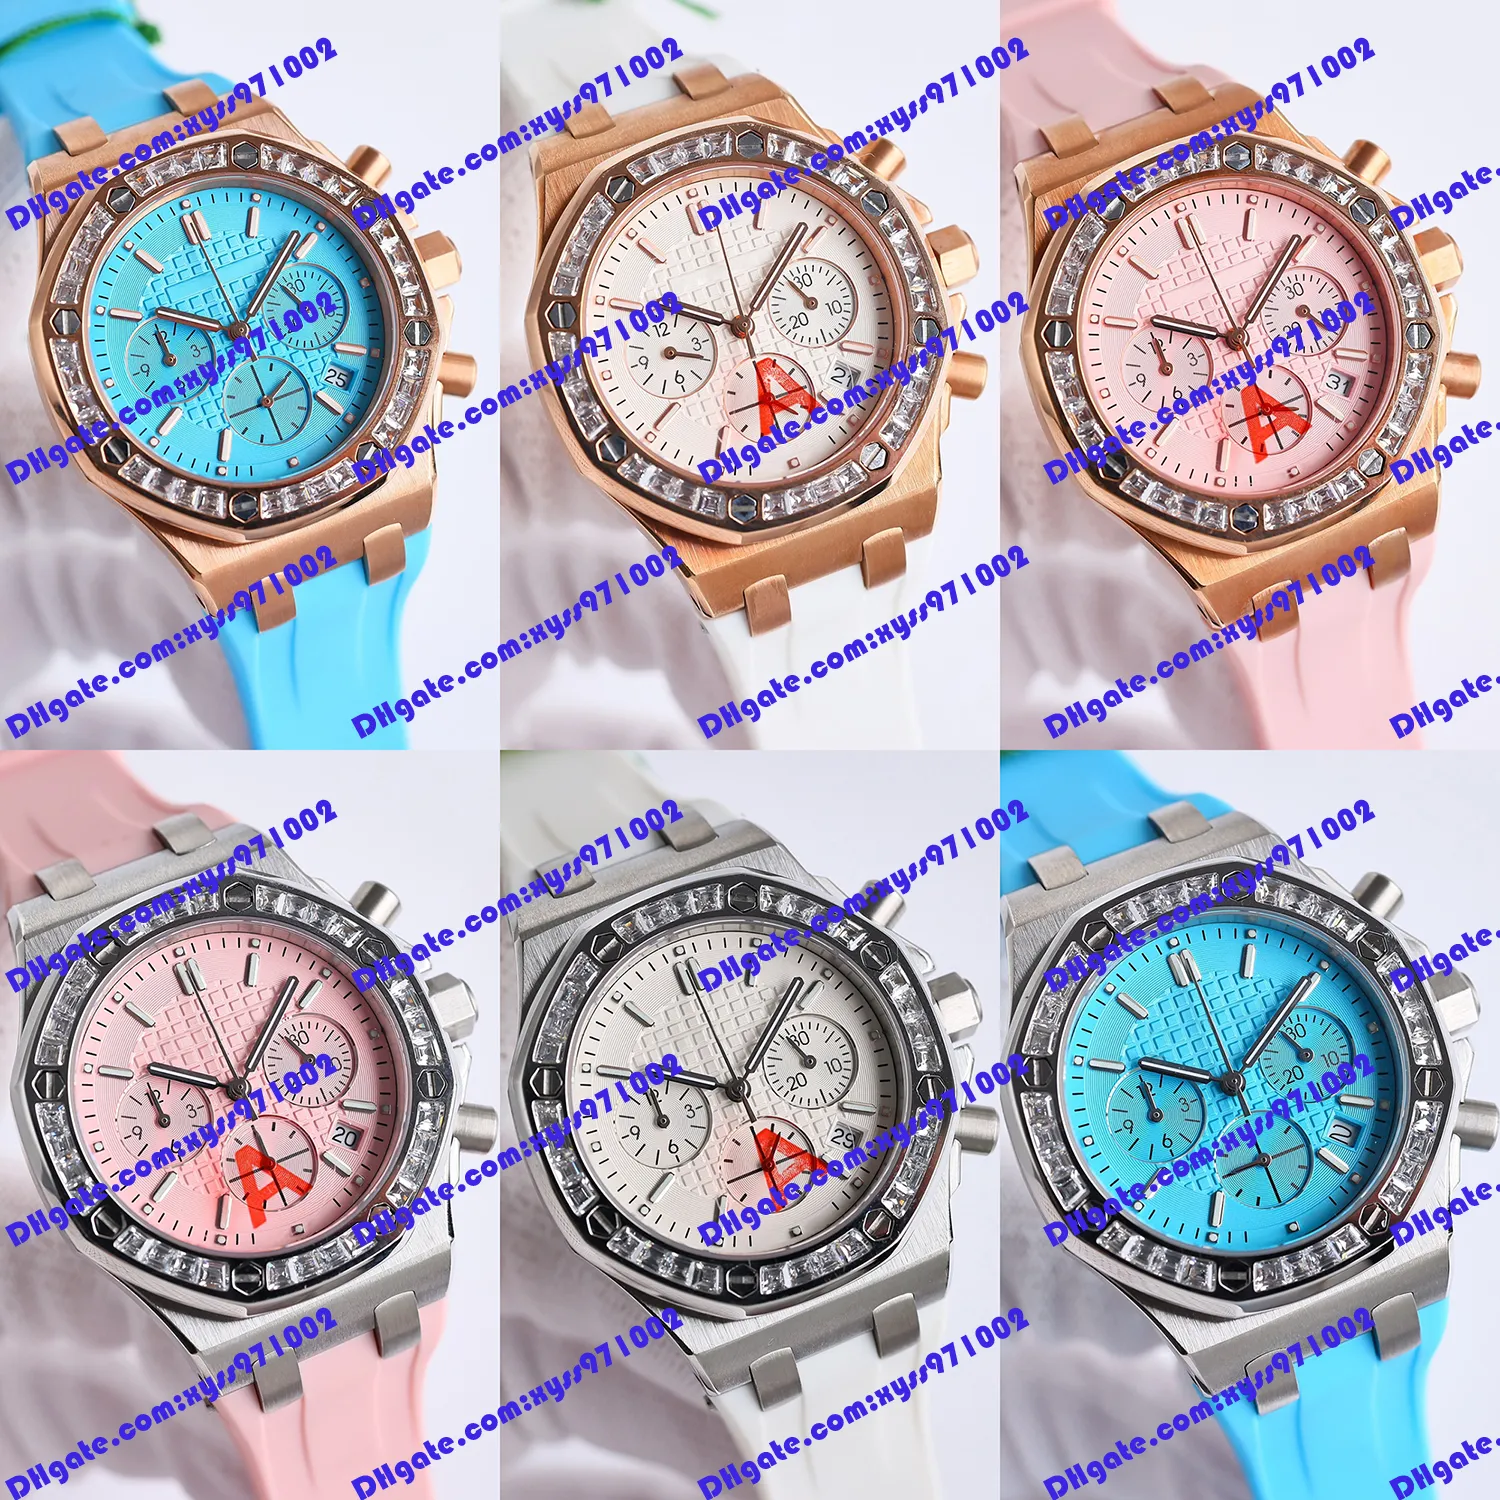 6 Model Watch Quartz Electronic Movement Women's Watch 37mm Pink Dial Diamond Bezel Gold Rubber Strap Sapphire Glass Men's Watch Timer Function 26231or.zz Armurwatch